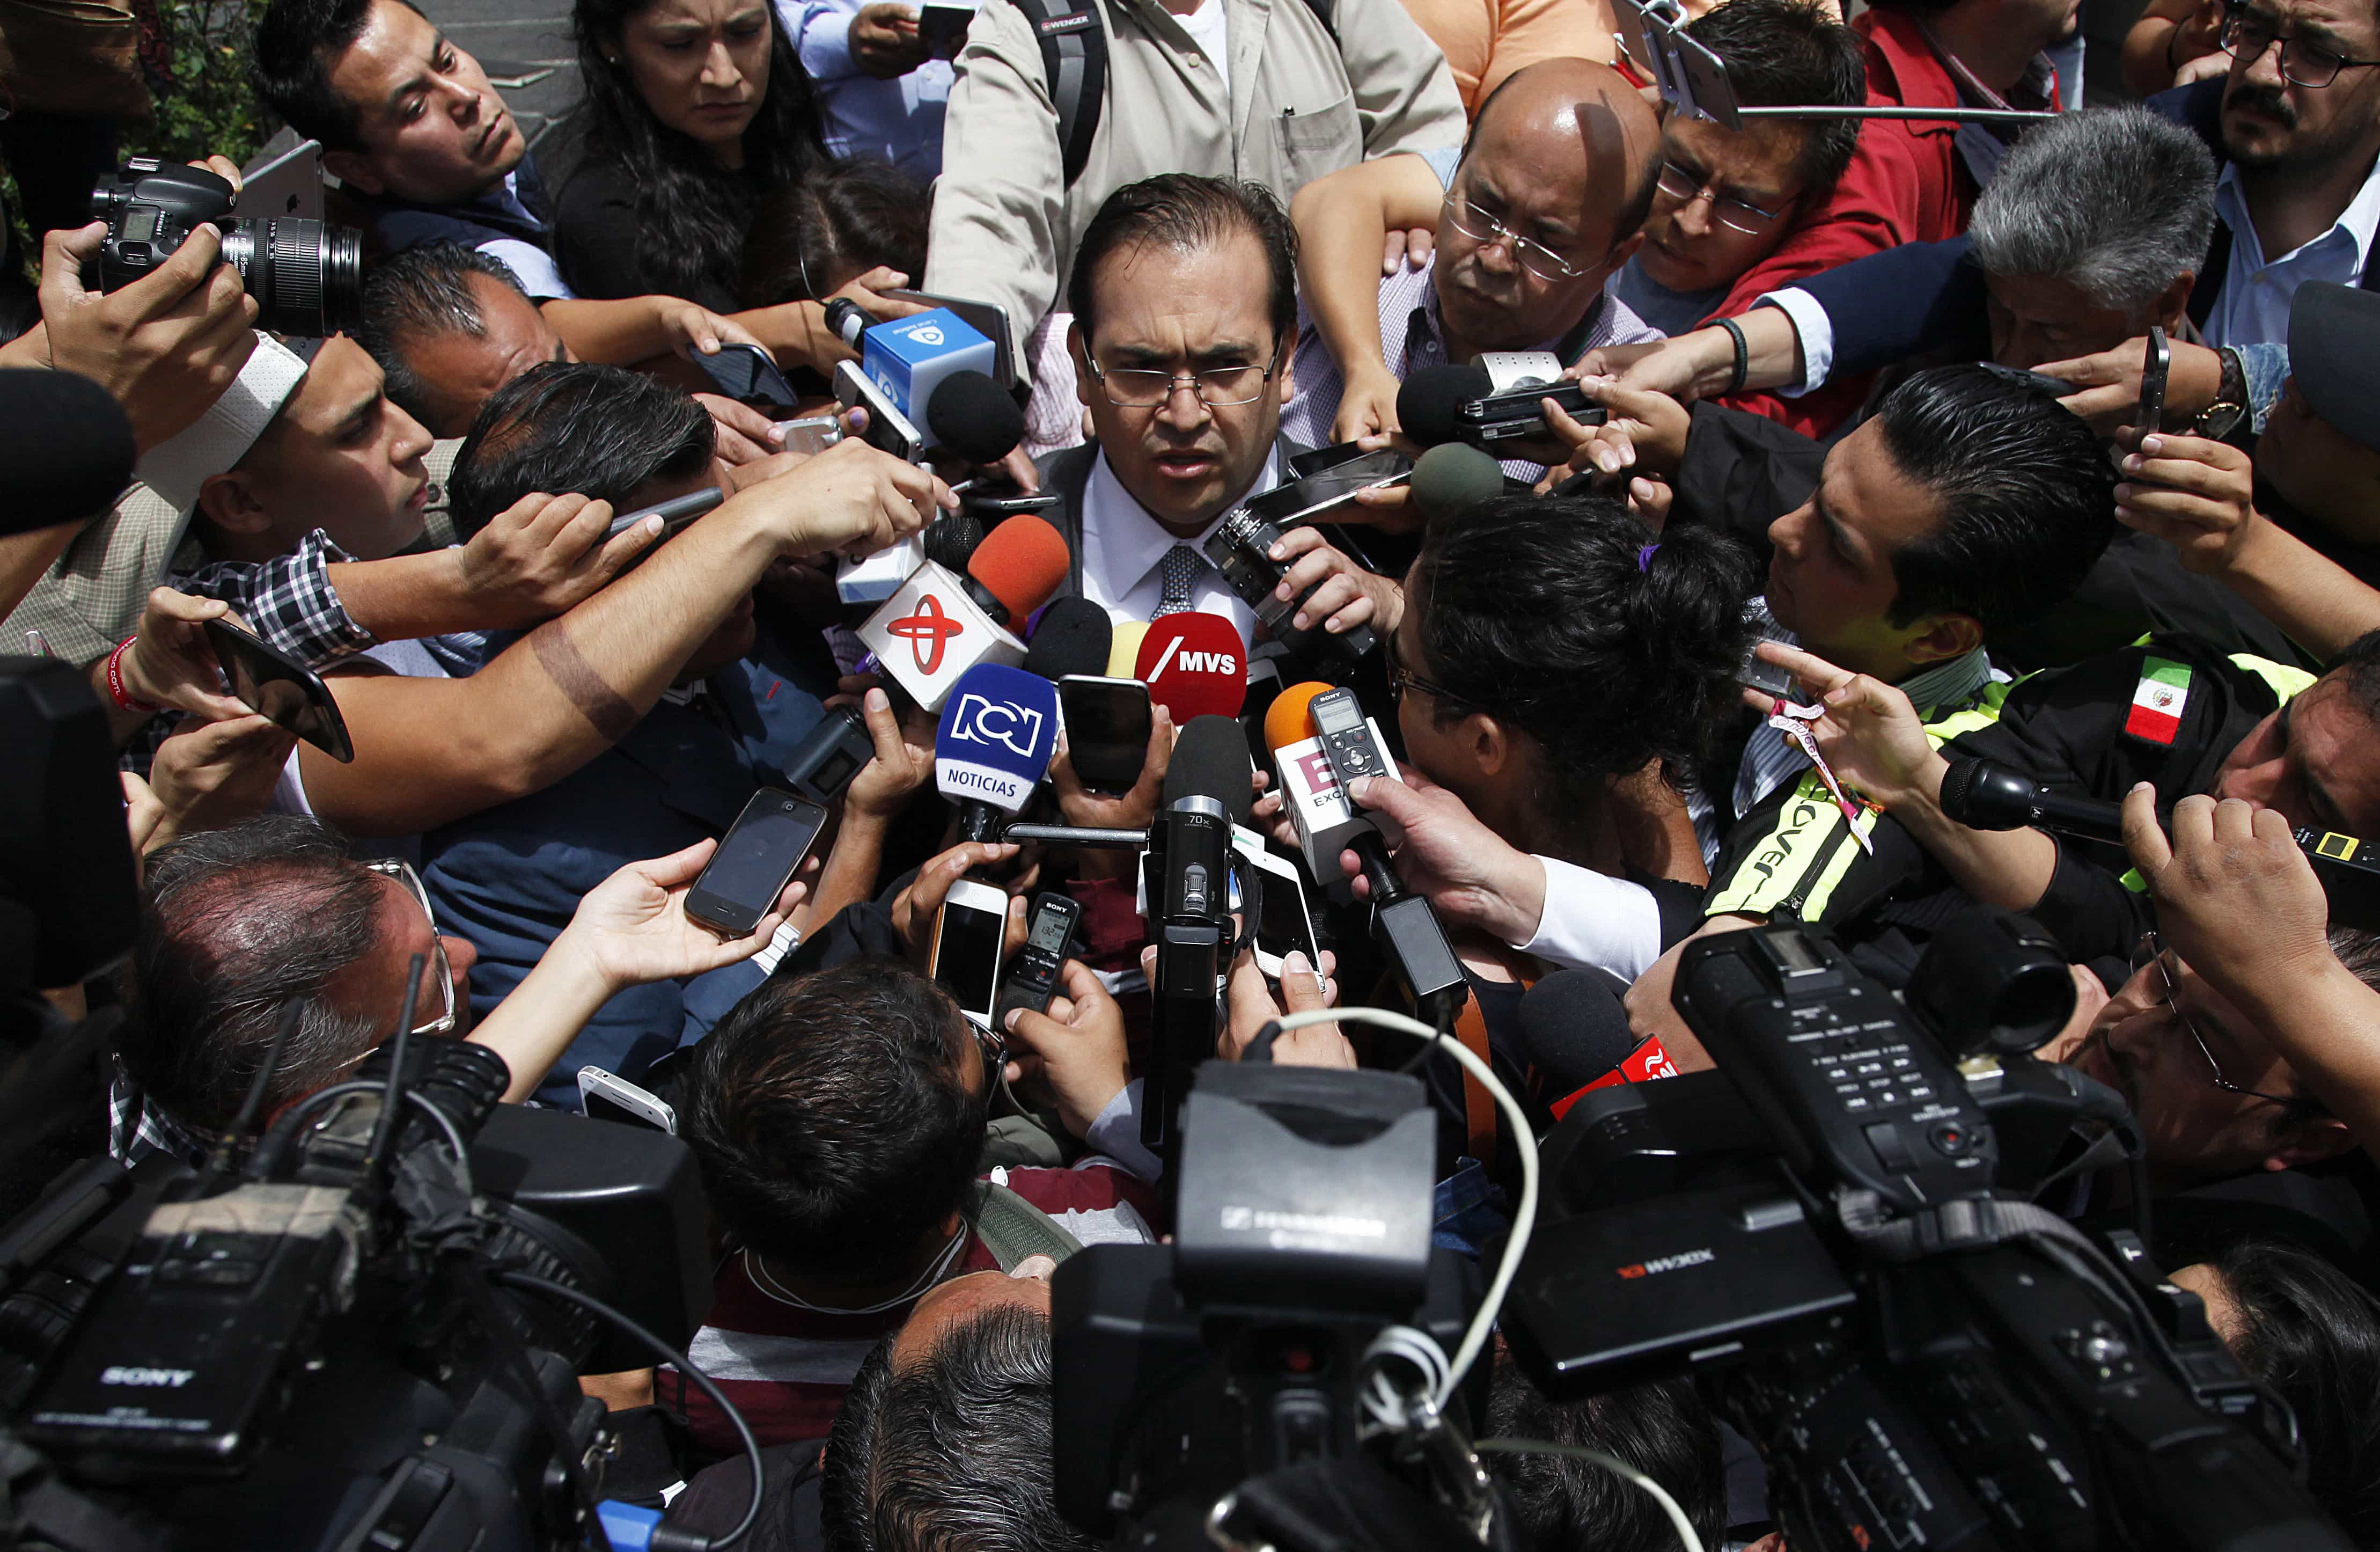 The press swarms around outgoing Veracruz Gov. Javier Duarte as he leaves the Attorney General's headquarters in Mexico City, AP Photo/Marco Ugarte